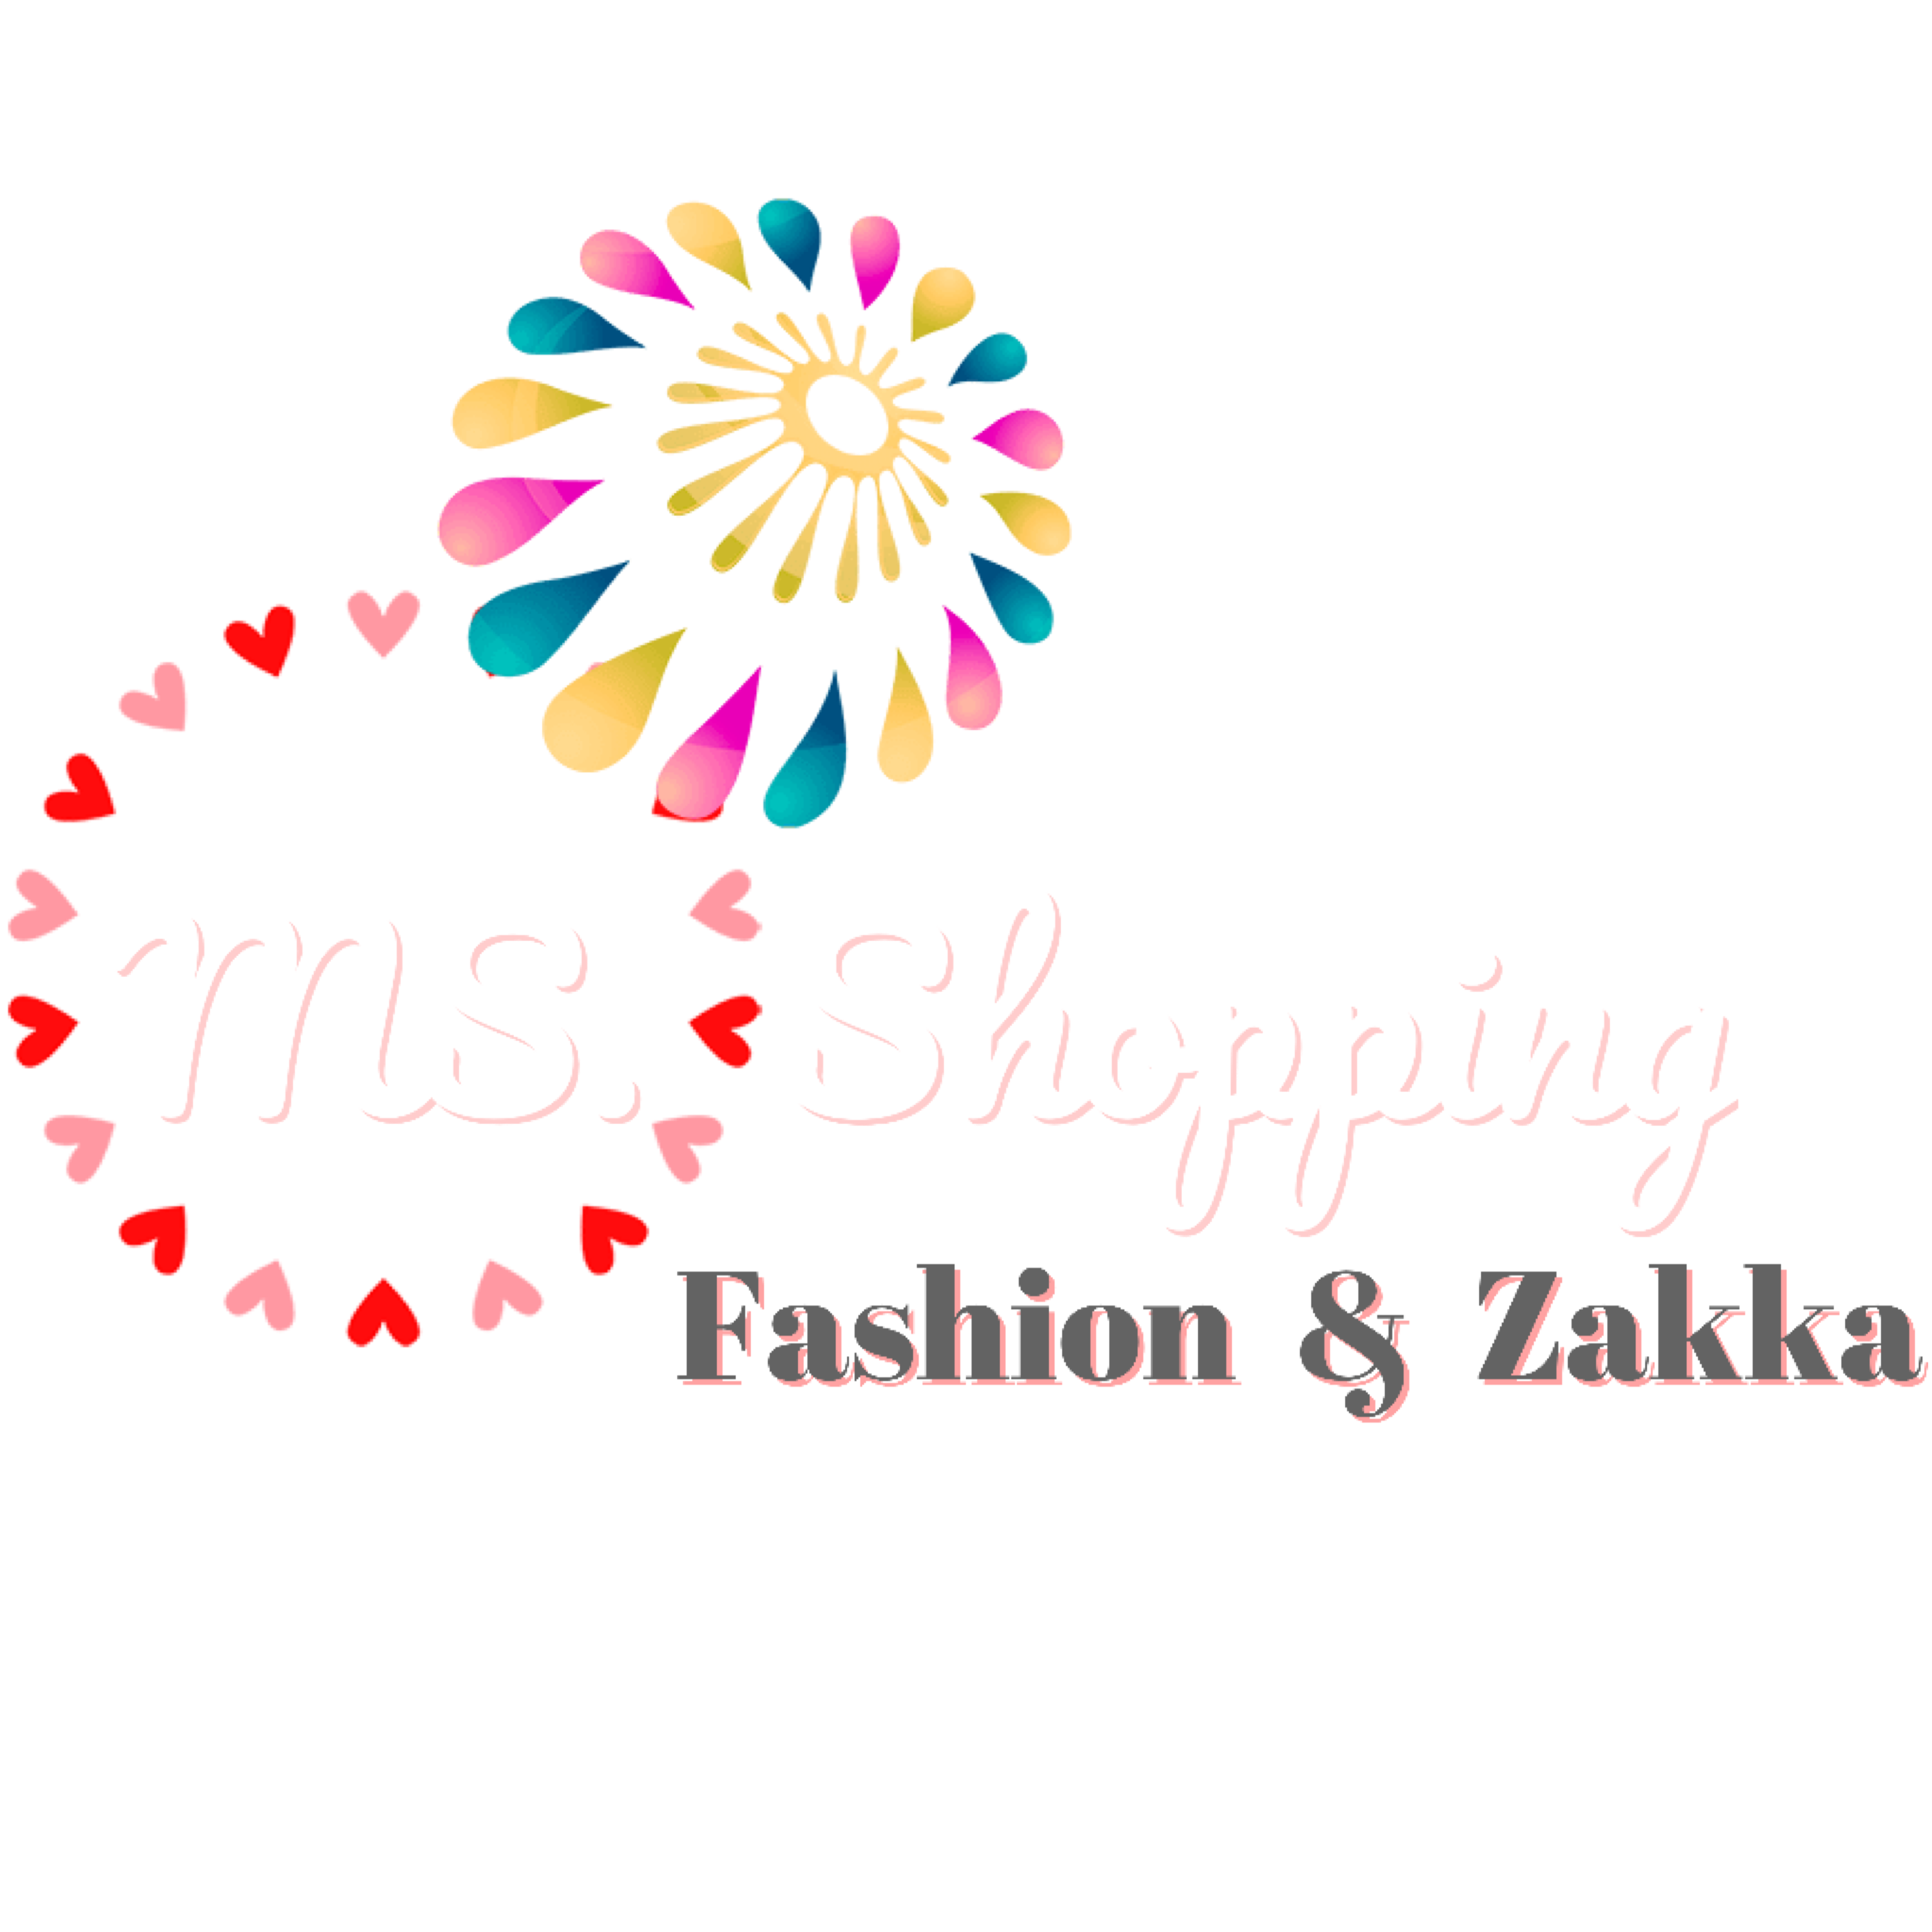 MS. Shopping